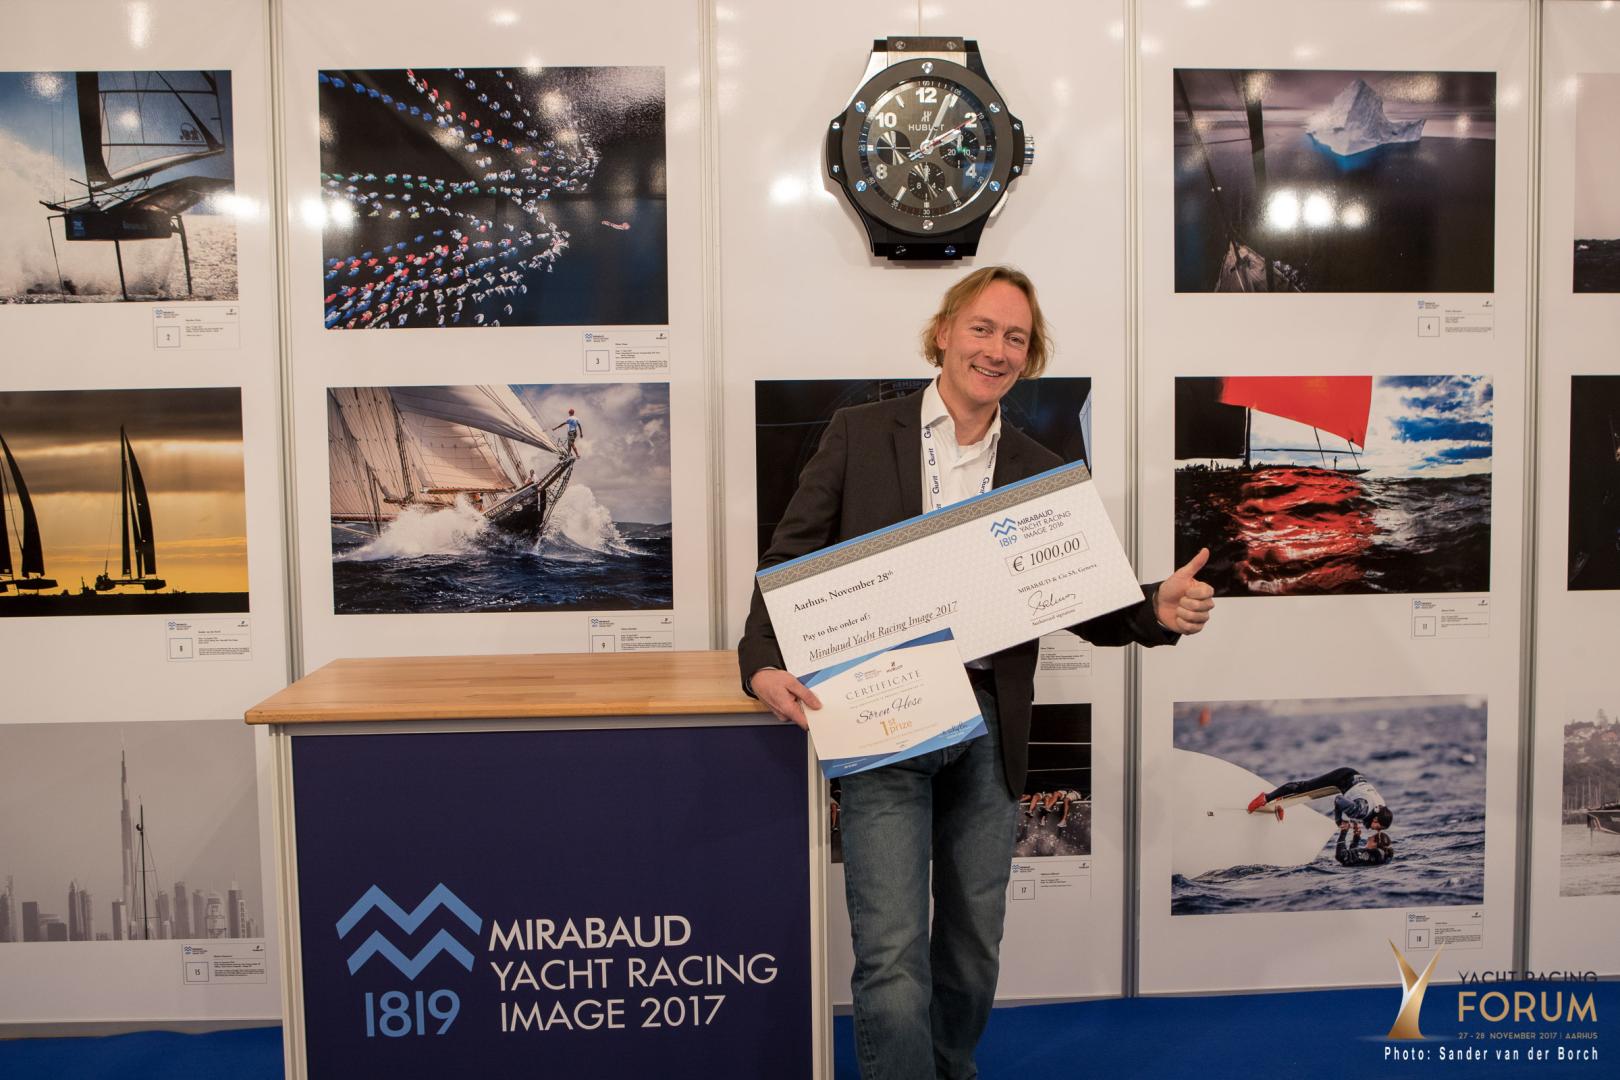 Sören Hese wins the Mirabaud Yacht Racing Image award 2017